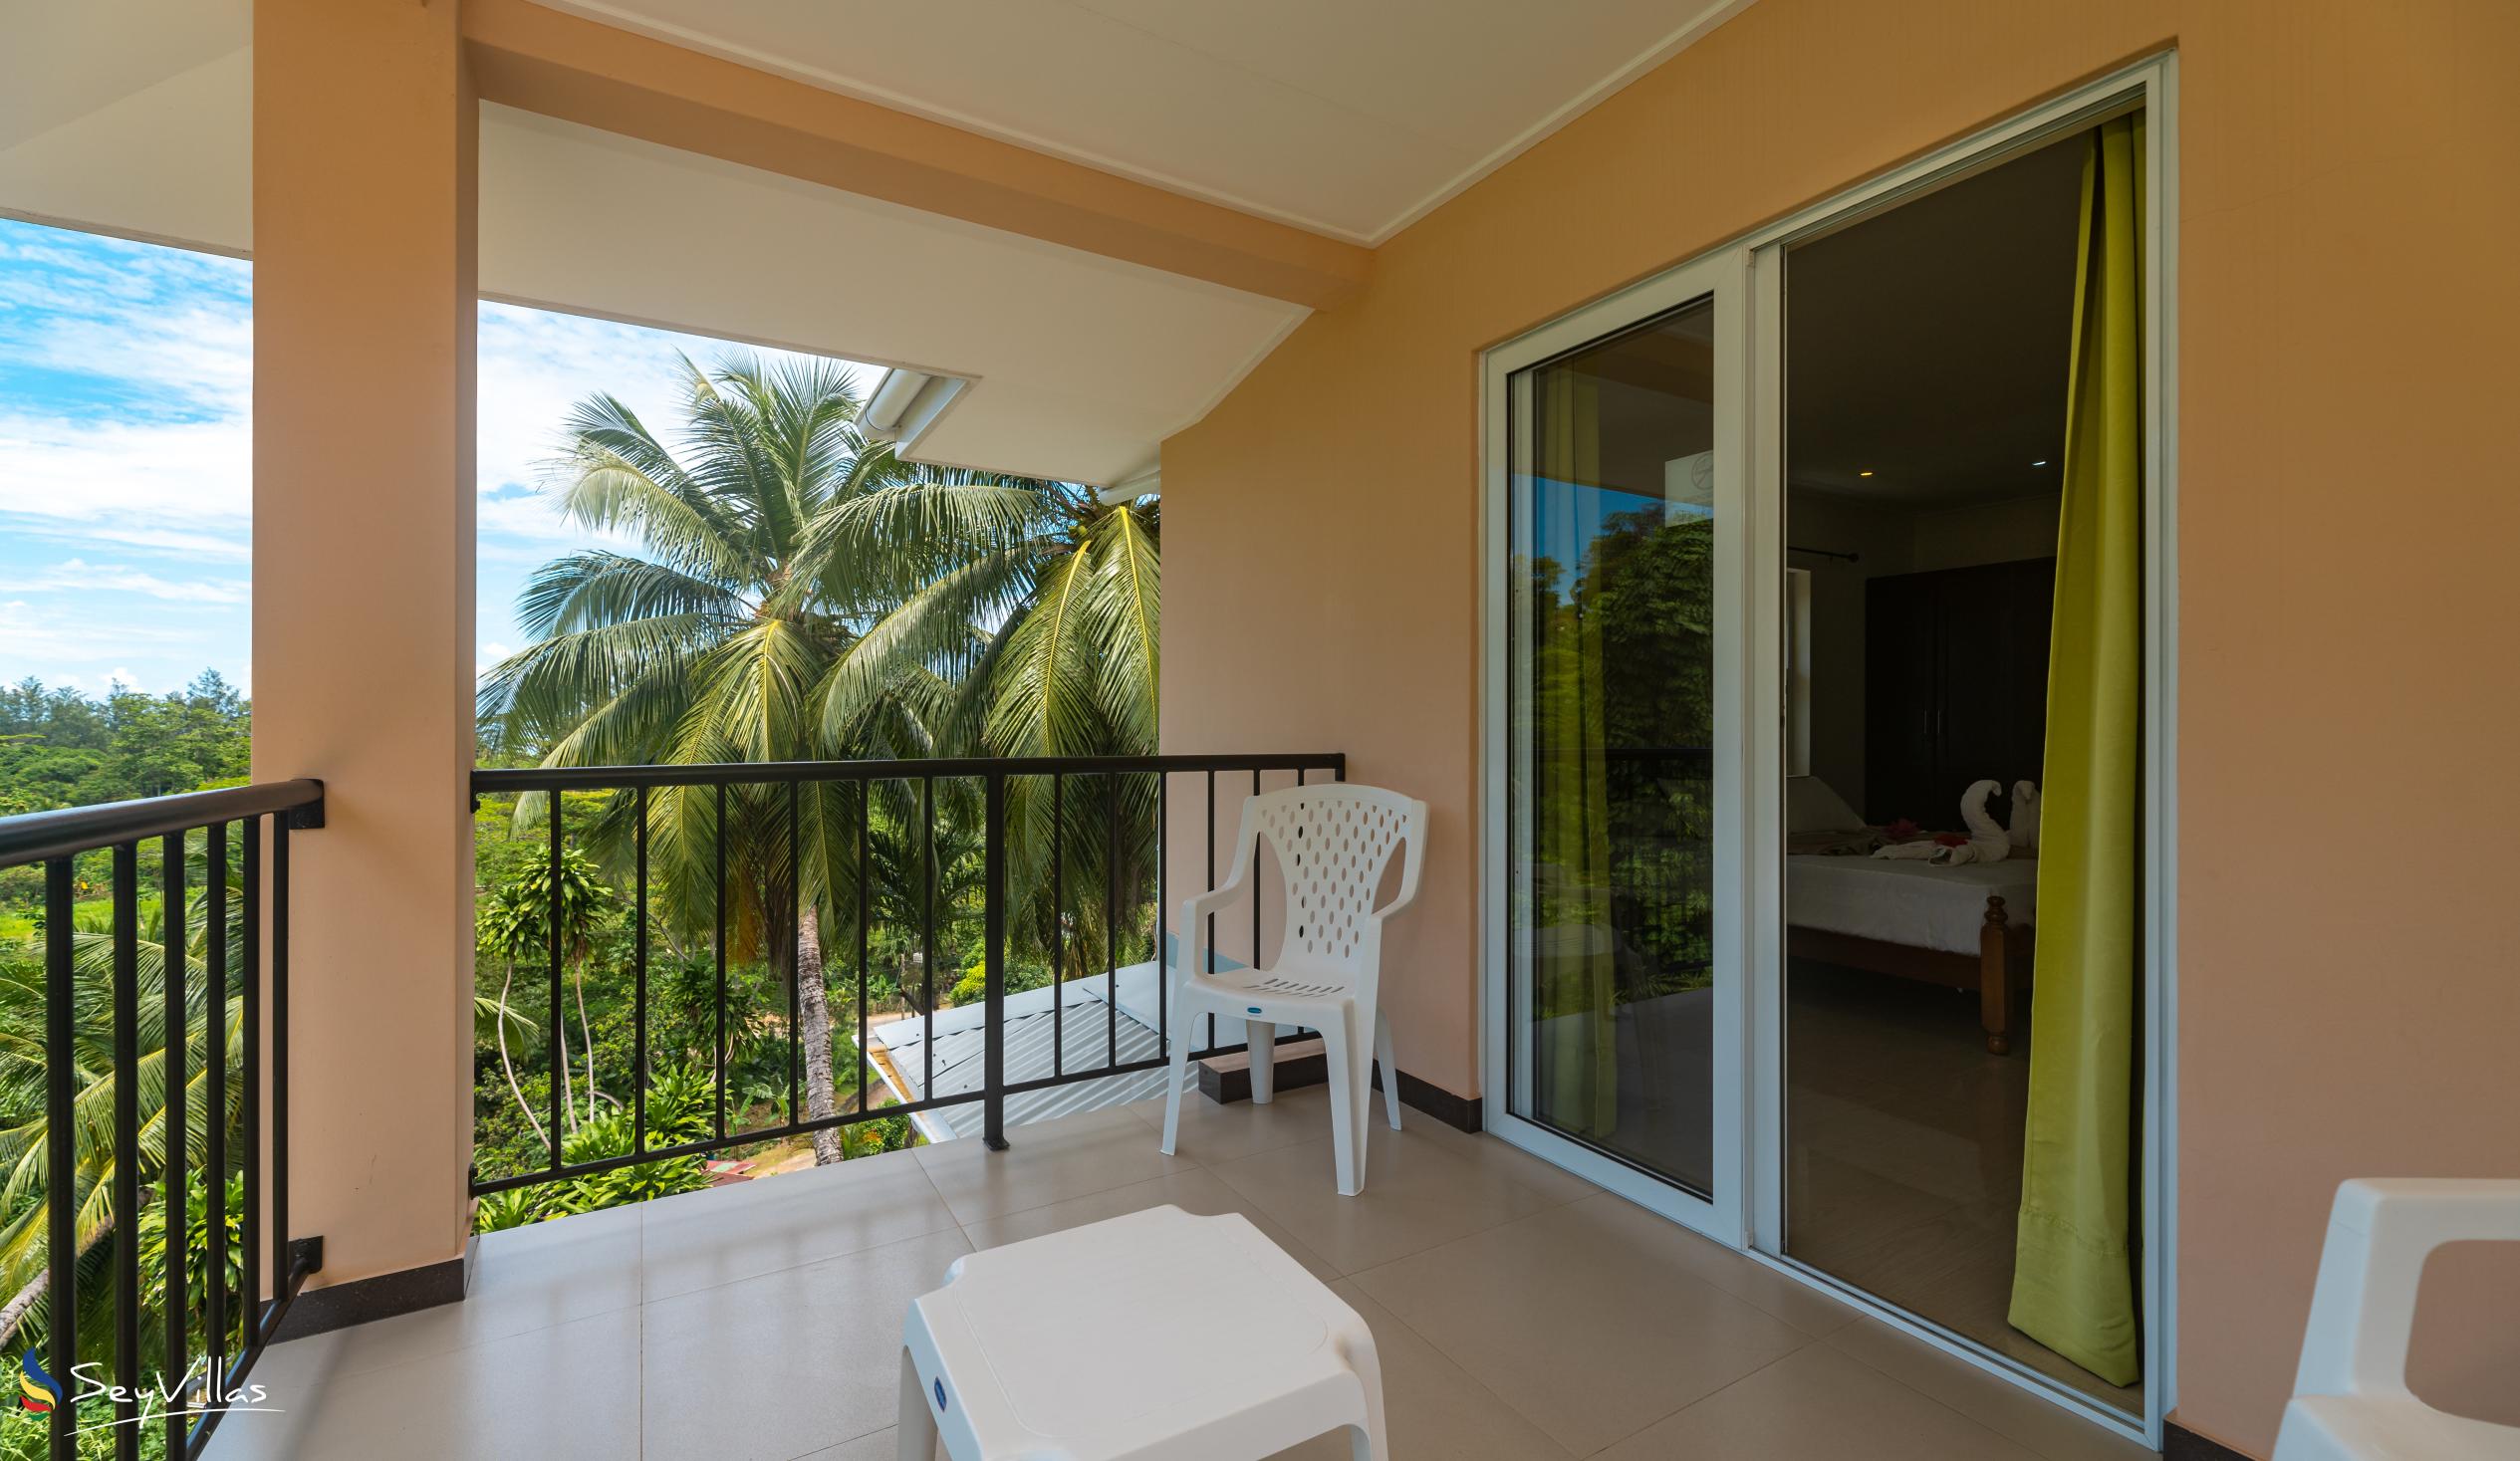 Photo 58: JAIDSS Holiday Apartments - 2-Bedroom Apartment - Mahé (Seychelles)